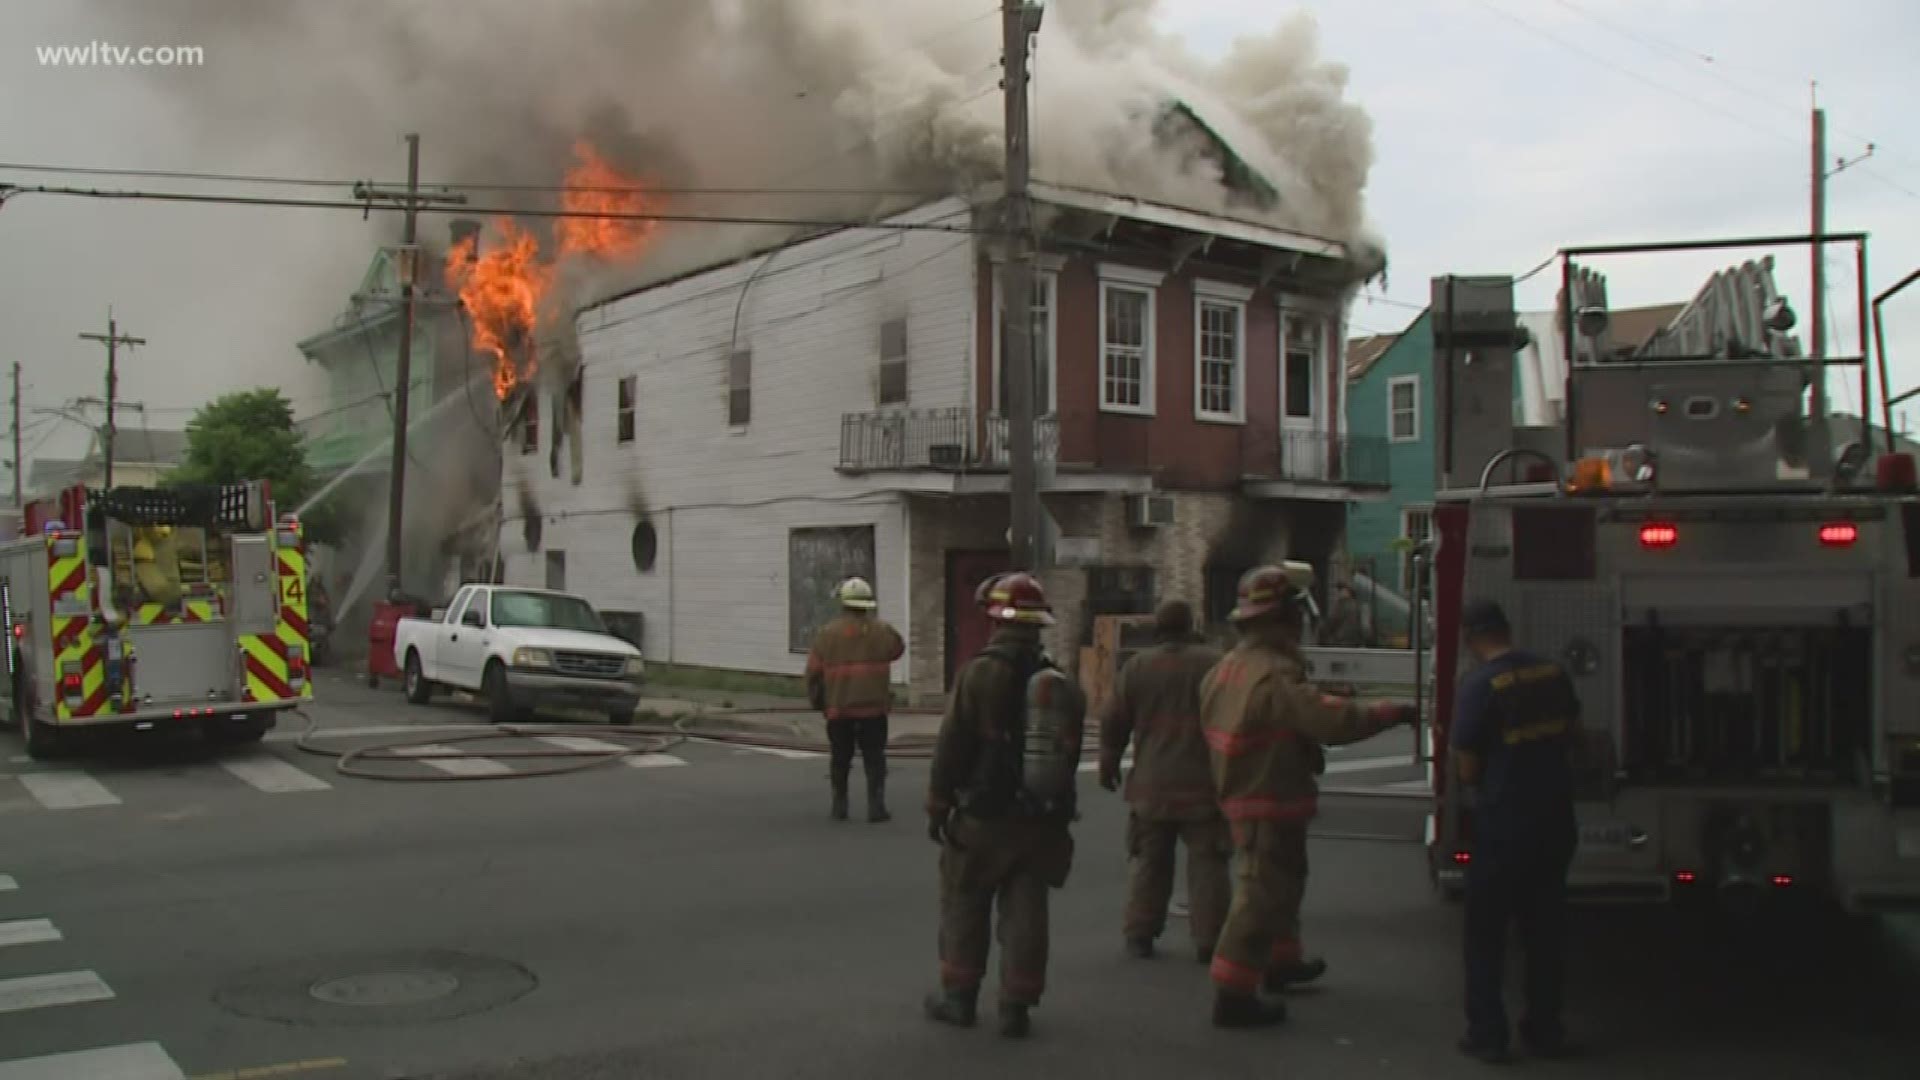 Sixth Ward restaurant destroyed in fire